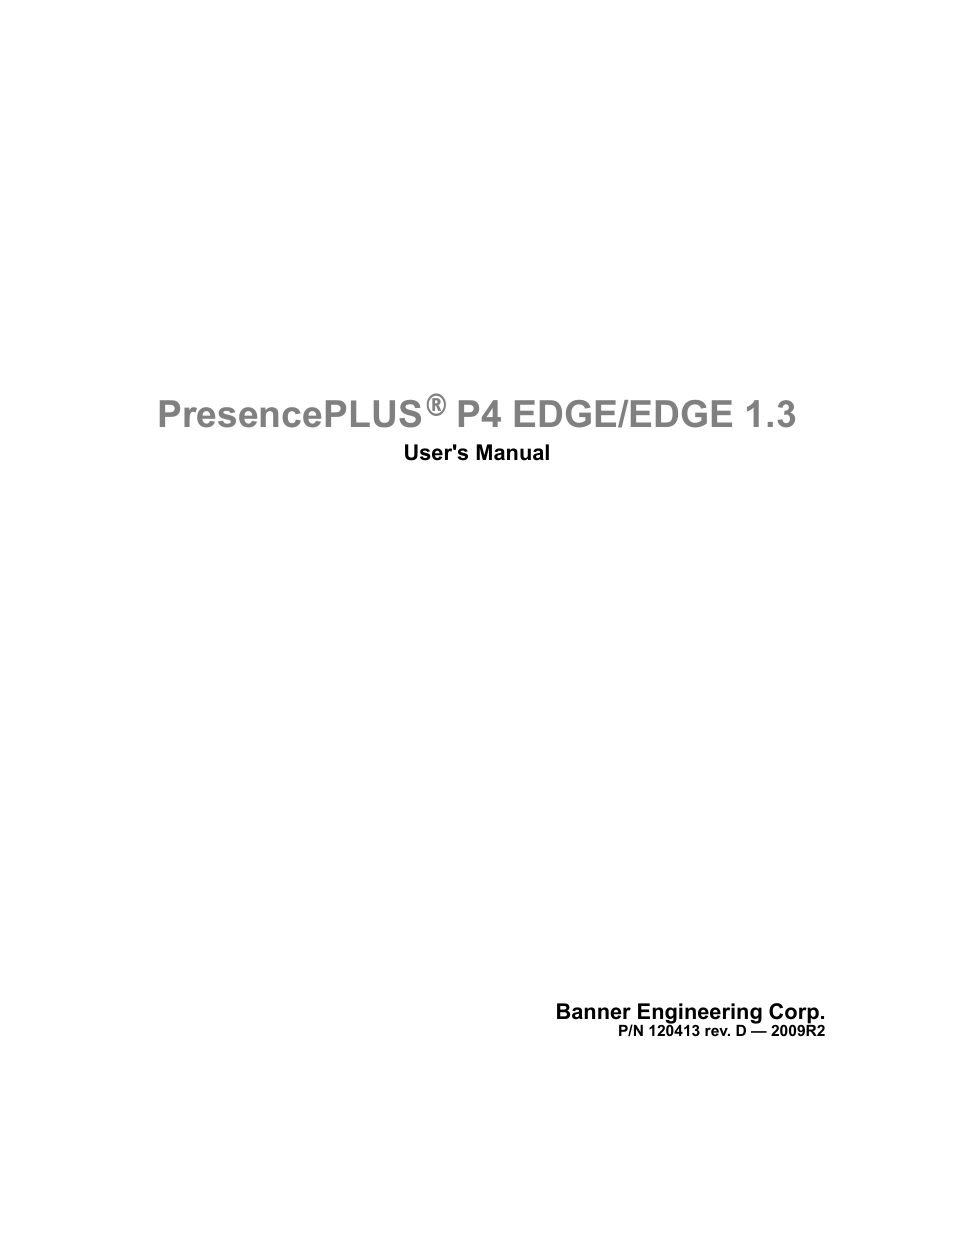 PresencePLUS P4 EDGE 1.3 Series